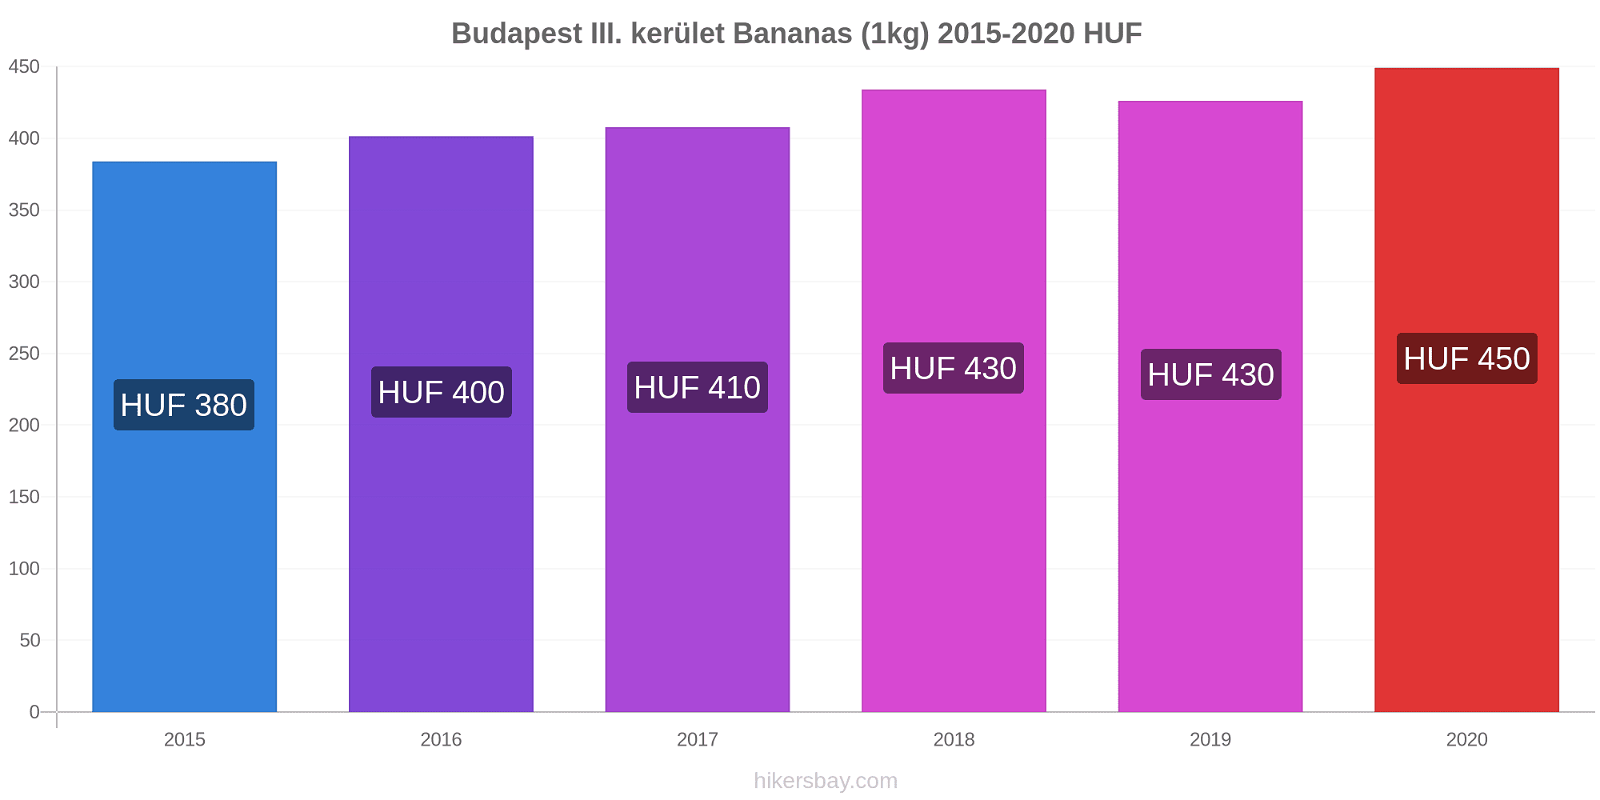 Budapest III. kerület price changes Bananas (1kg) hikersbay.com